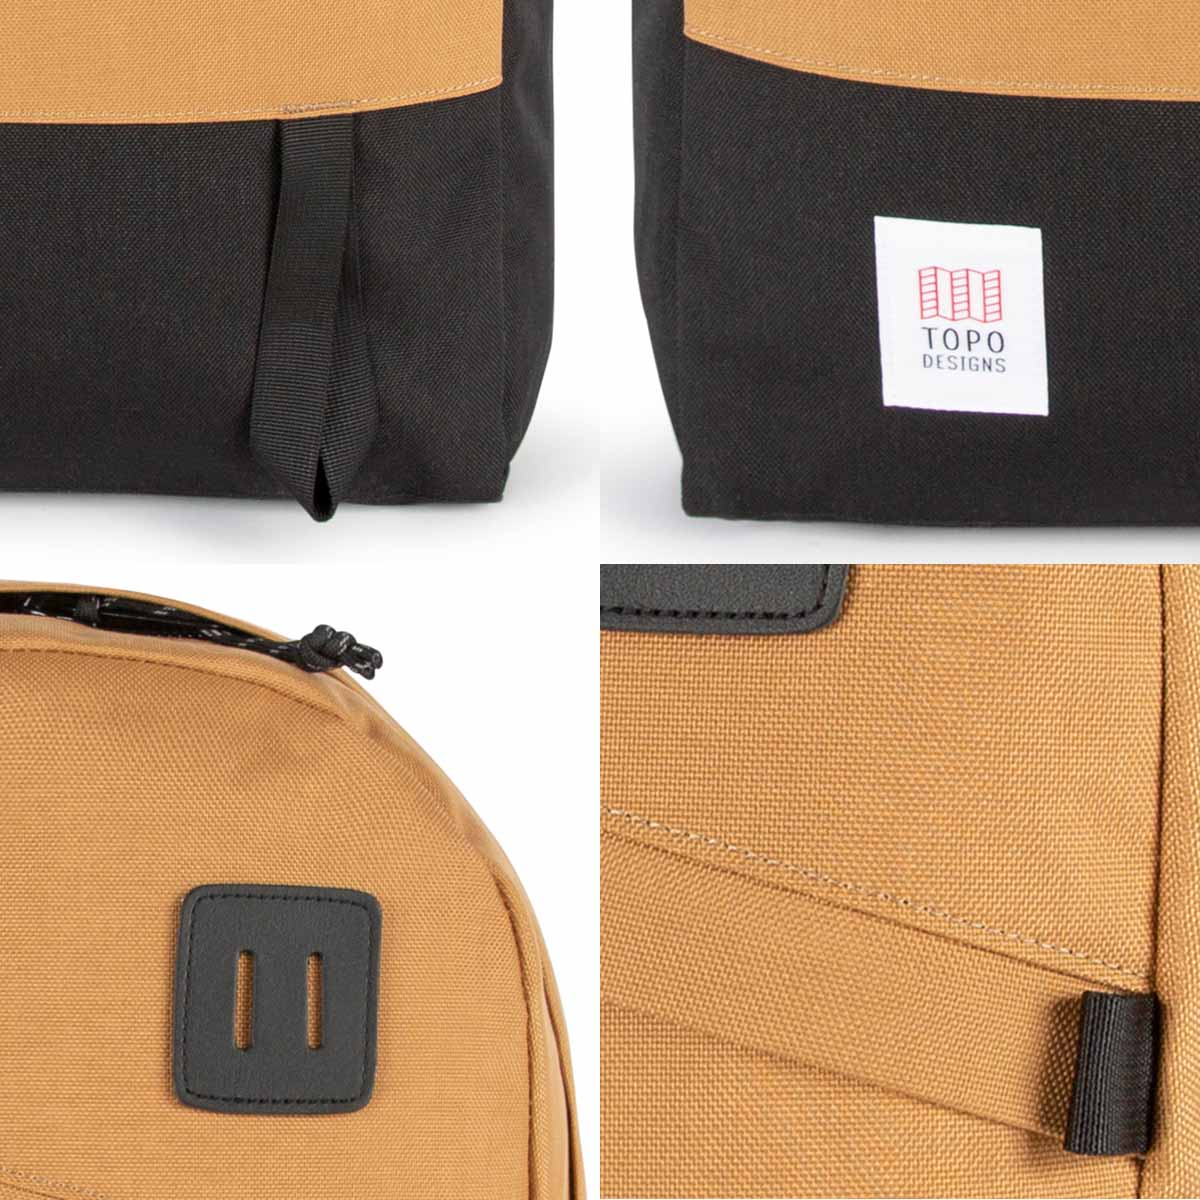 Topo Designs Daypack Classic Khaki/Black, details